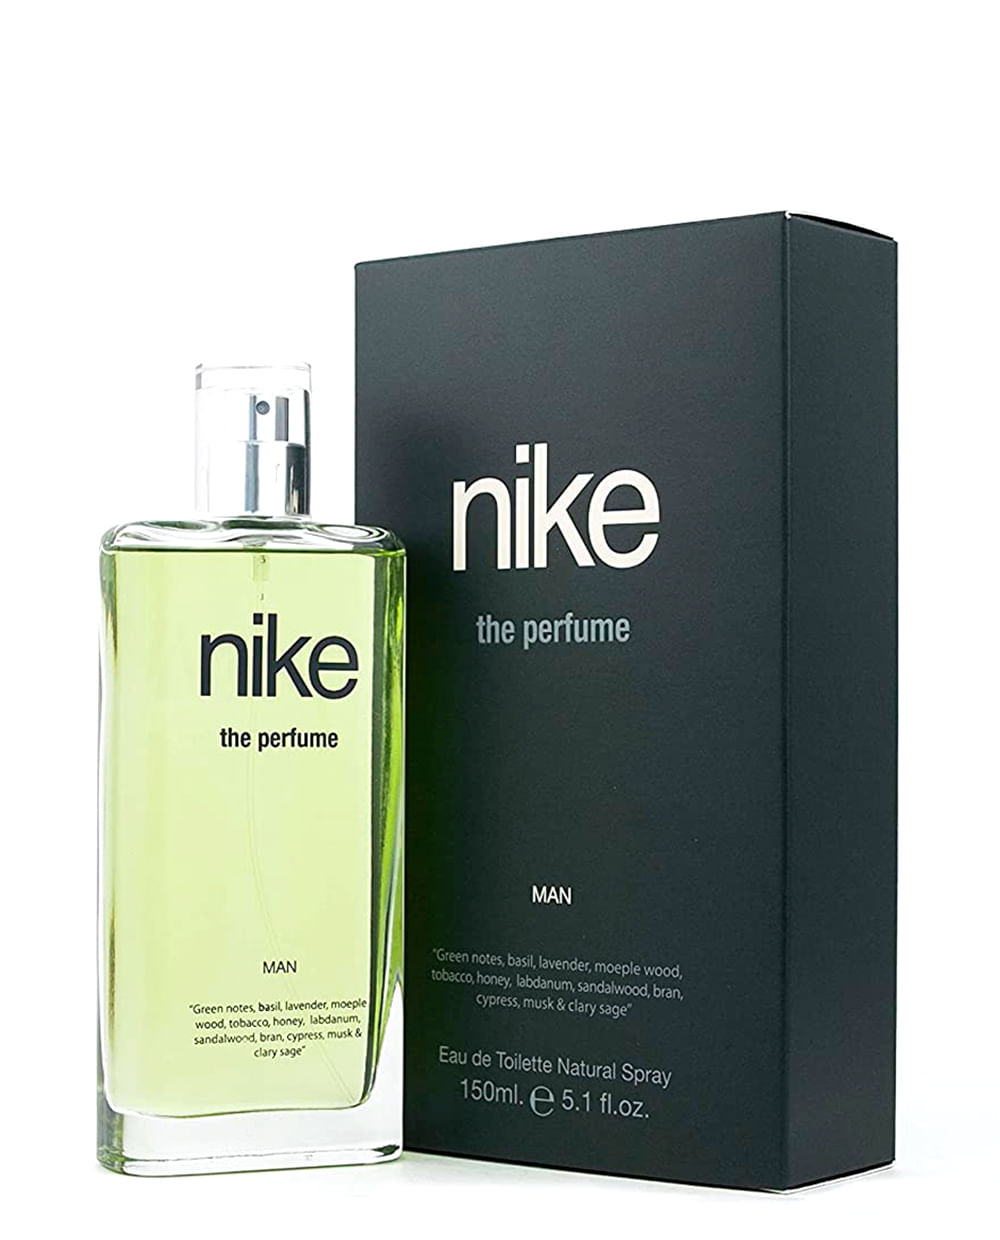 Nike The Perfume Man Eau Toilette 150ml - Siman El Salvador